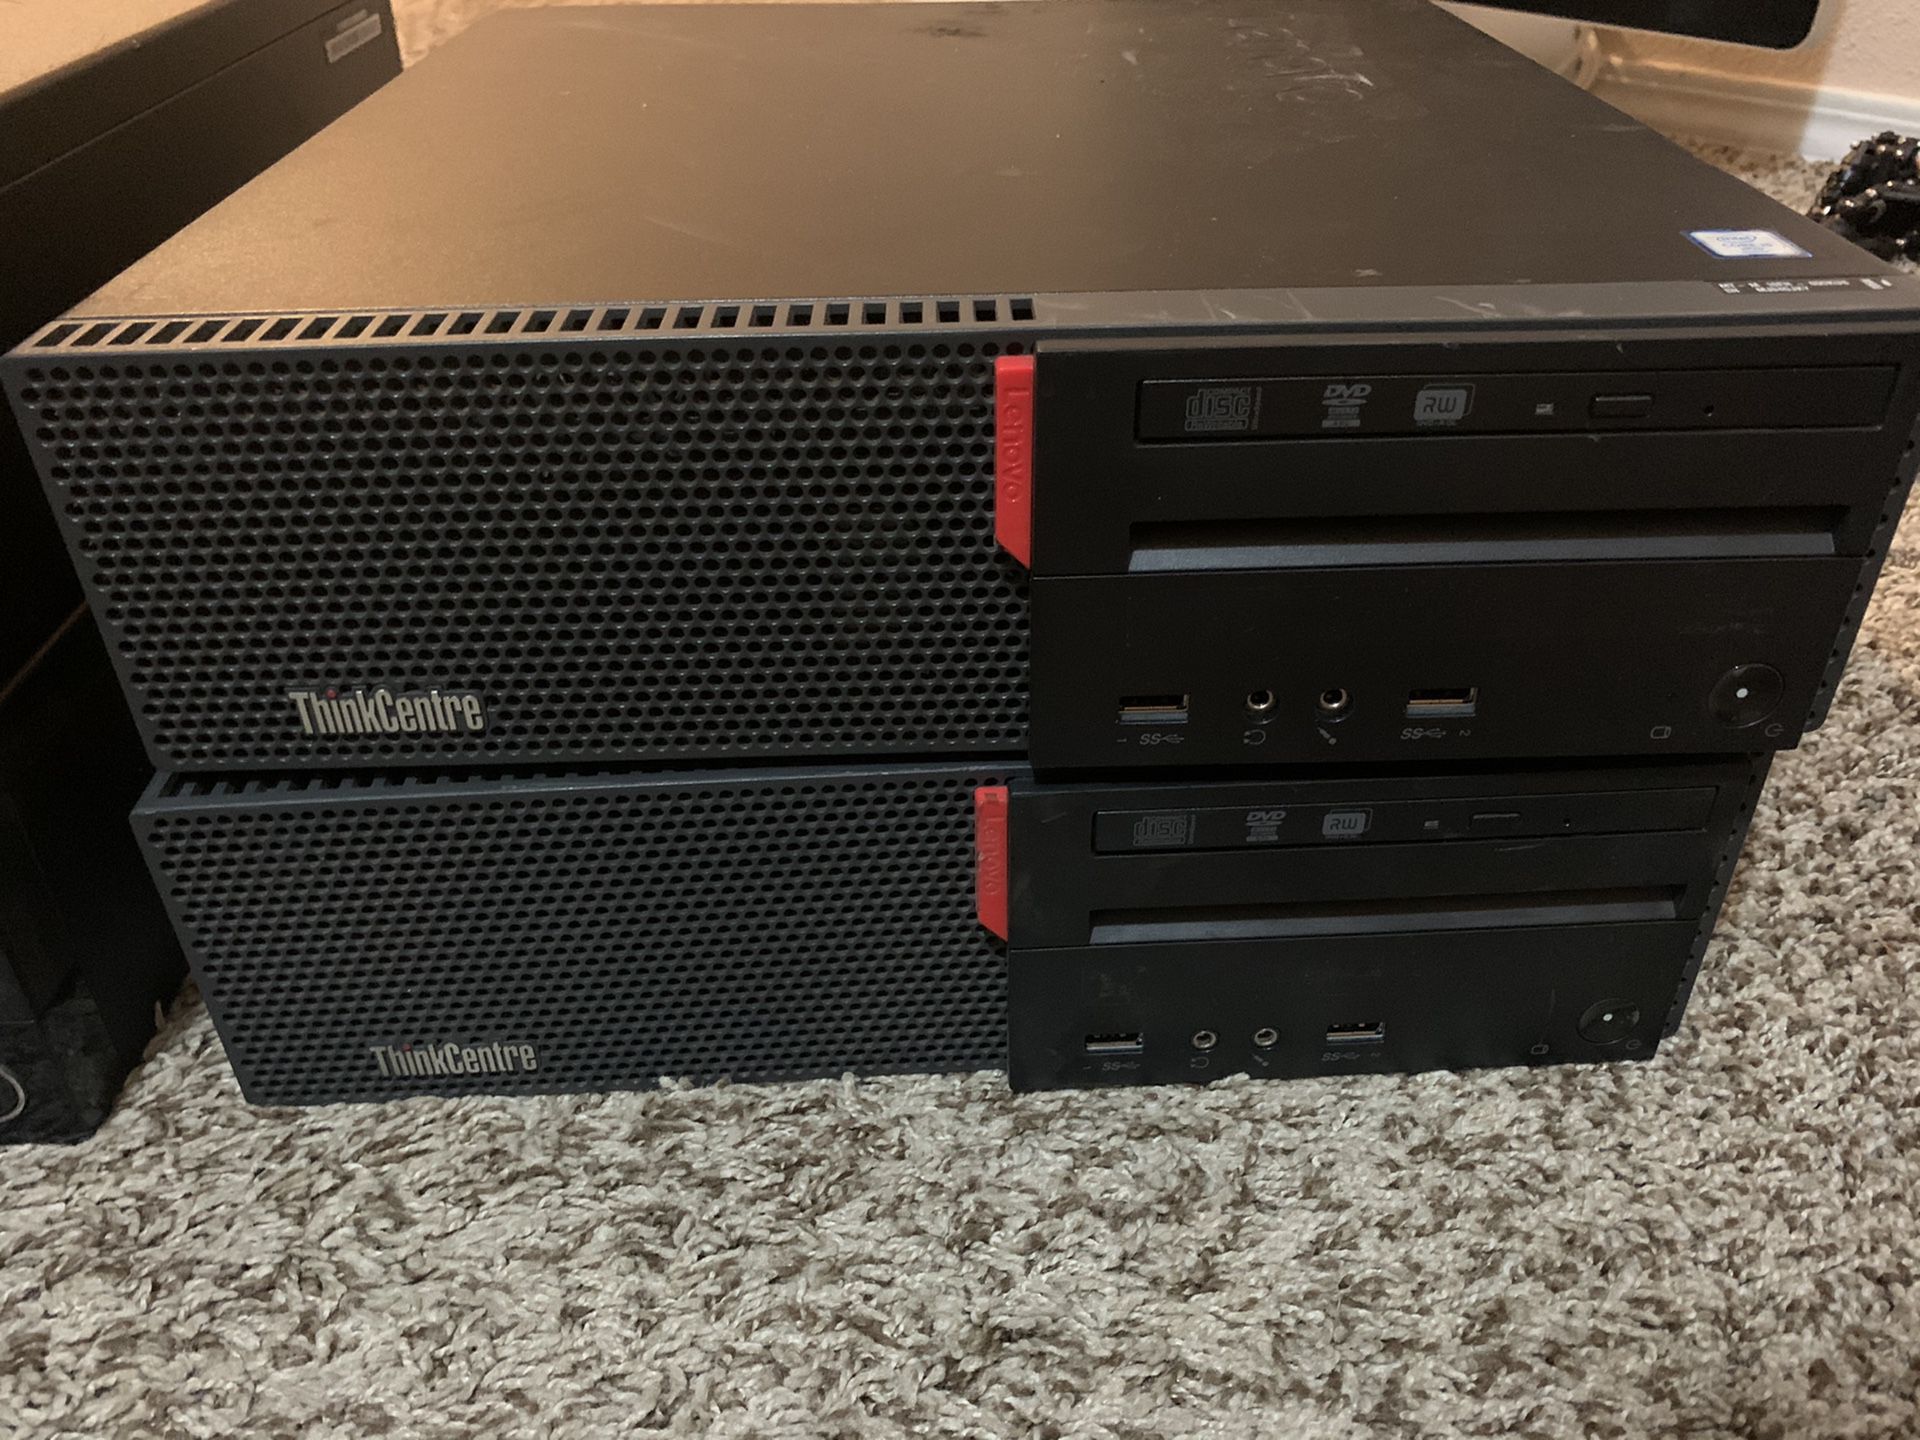 Lot of 4 Lenovo Thinkcentre Computers i5 6500 & i5 4570